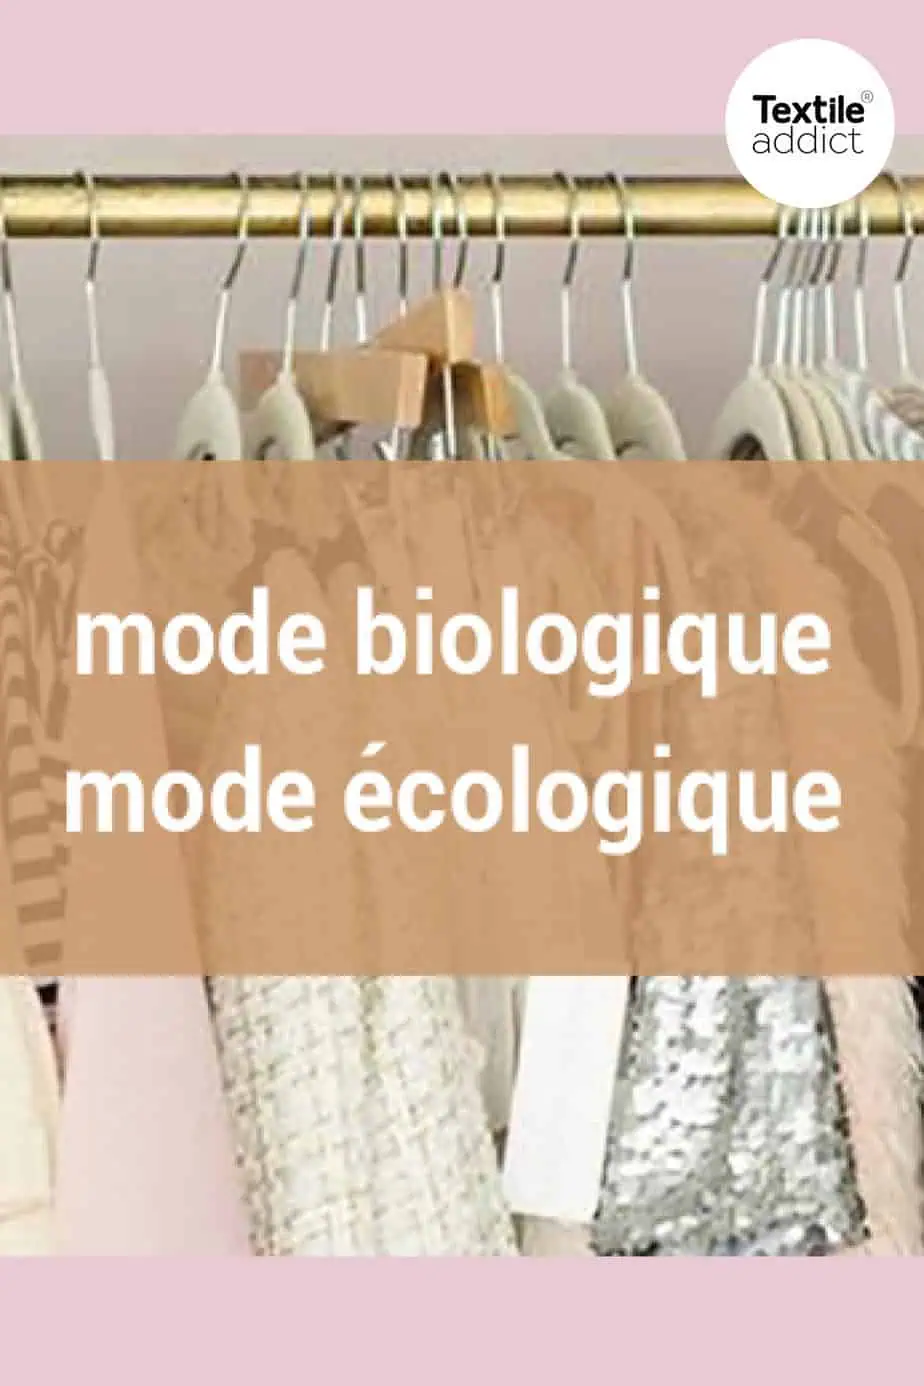 mode biologique mode ecologique